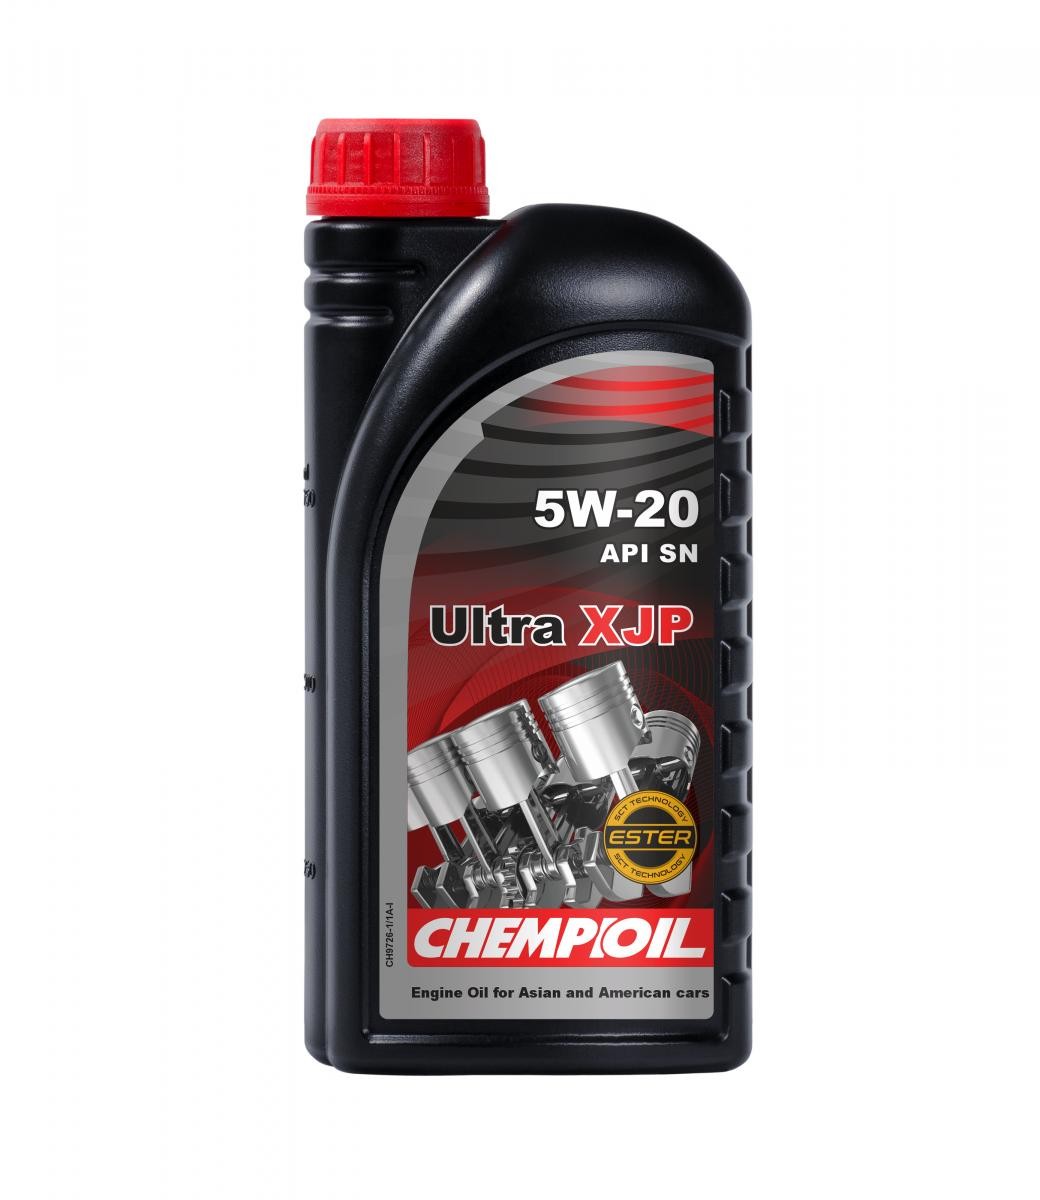 CHEMPIOIL Ultra, XJP CH9726-1 Engine oil 5W-20, 1l